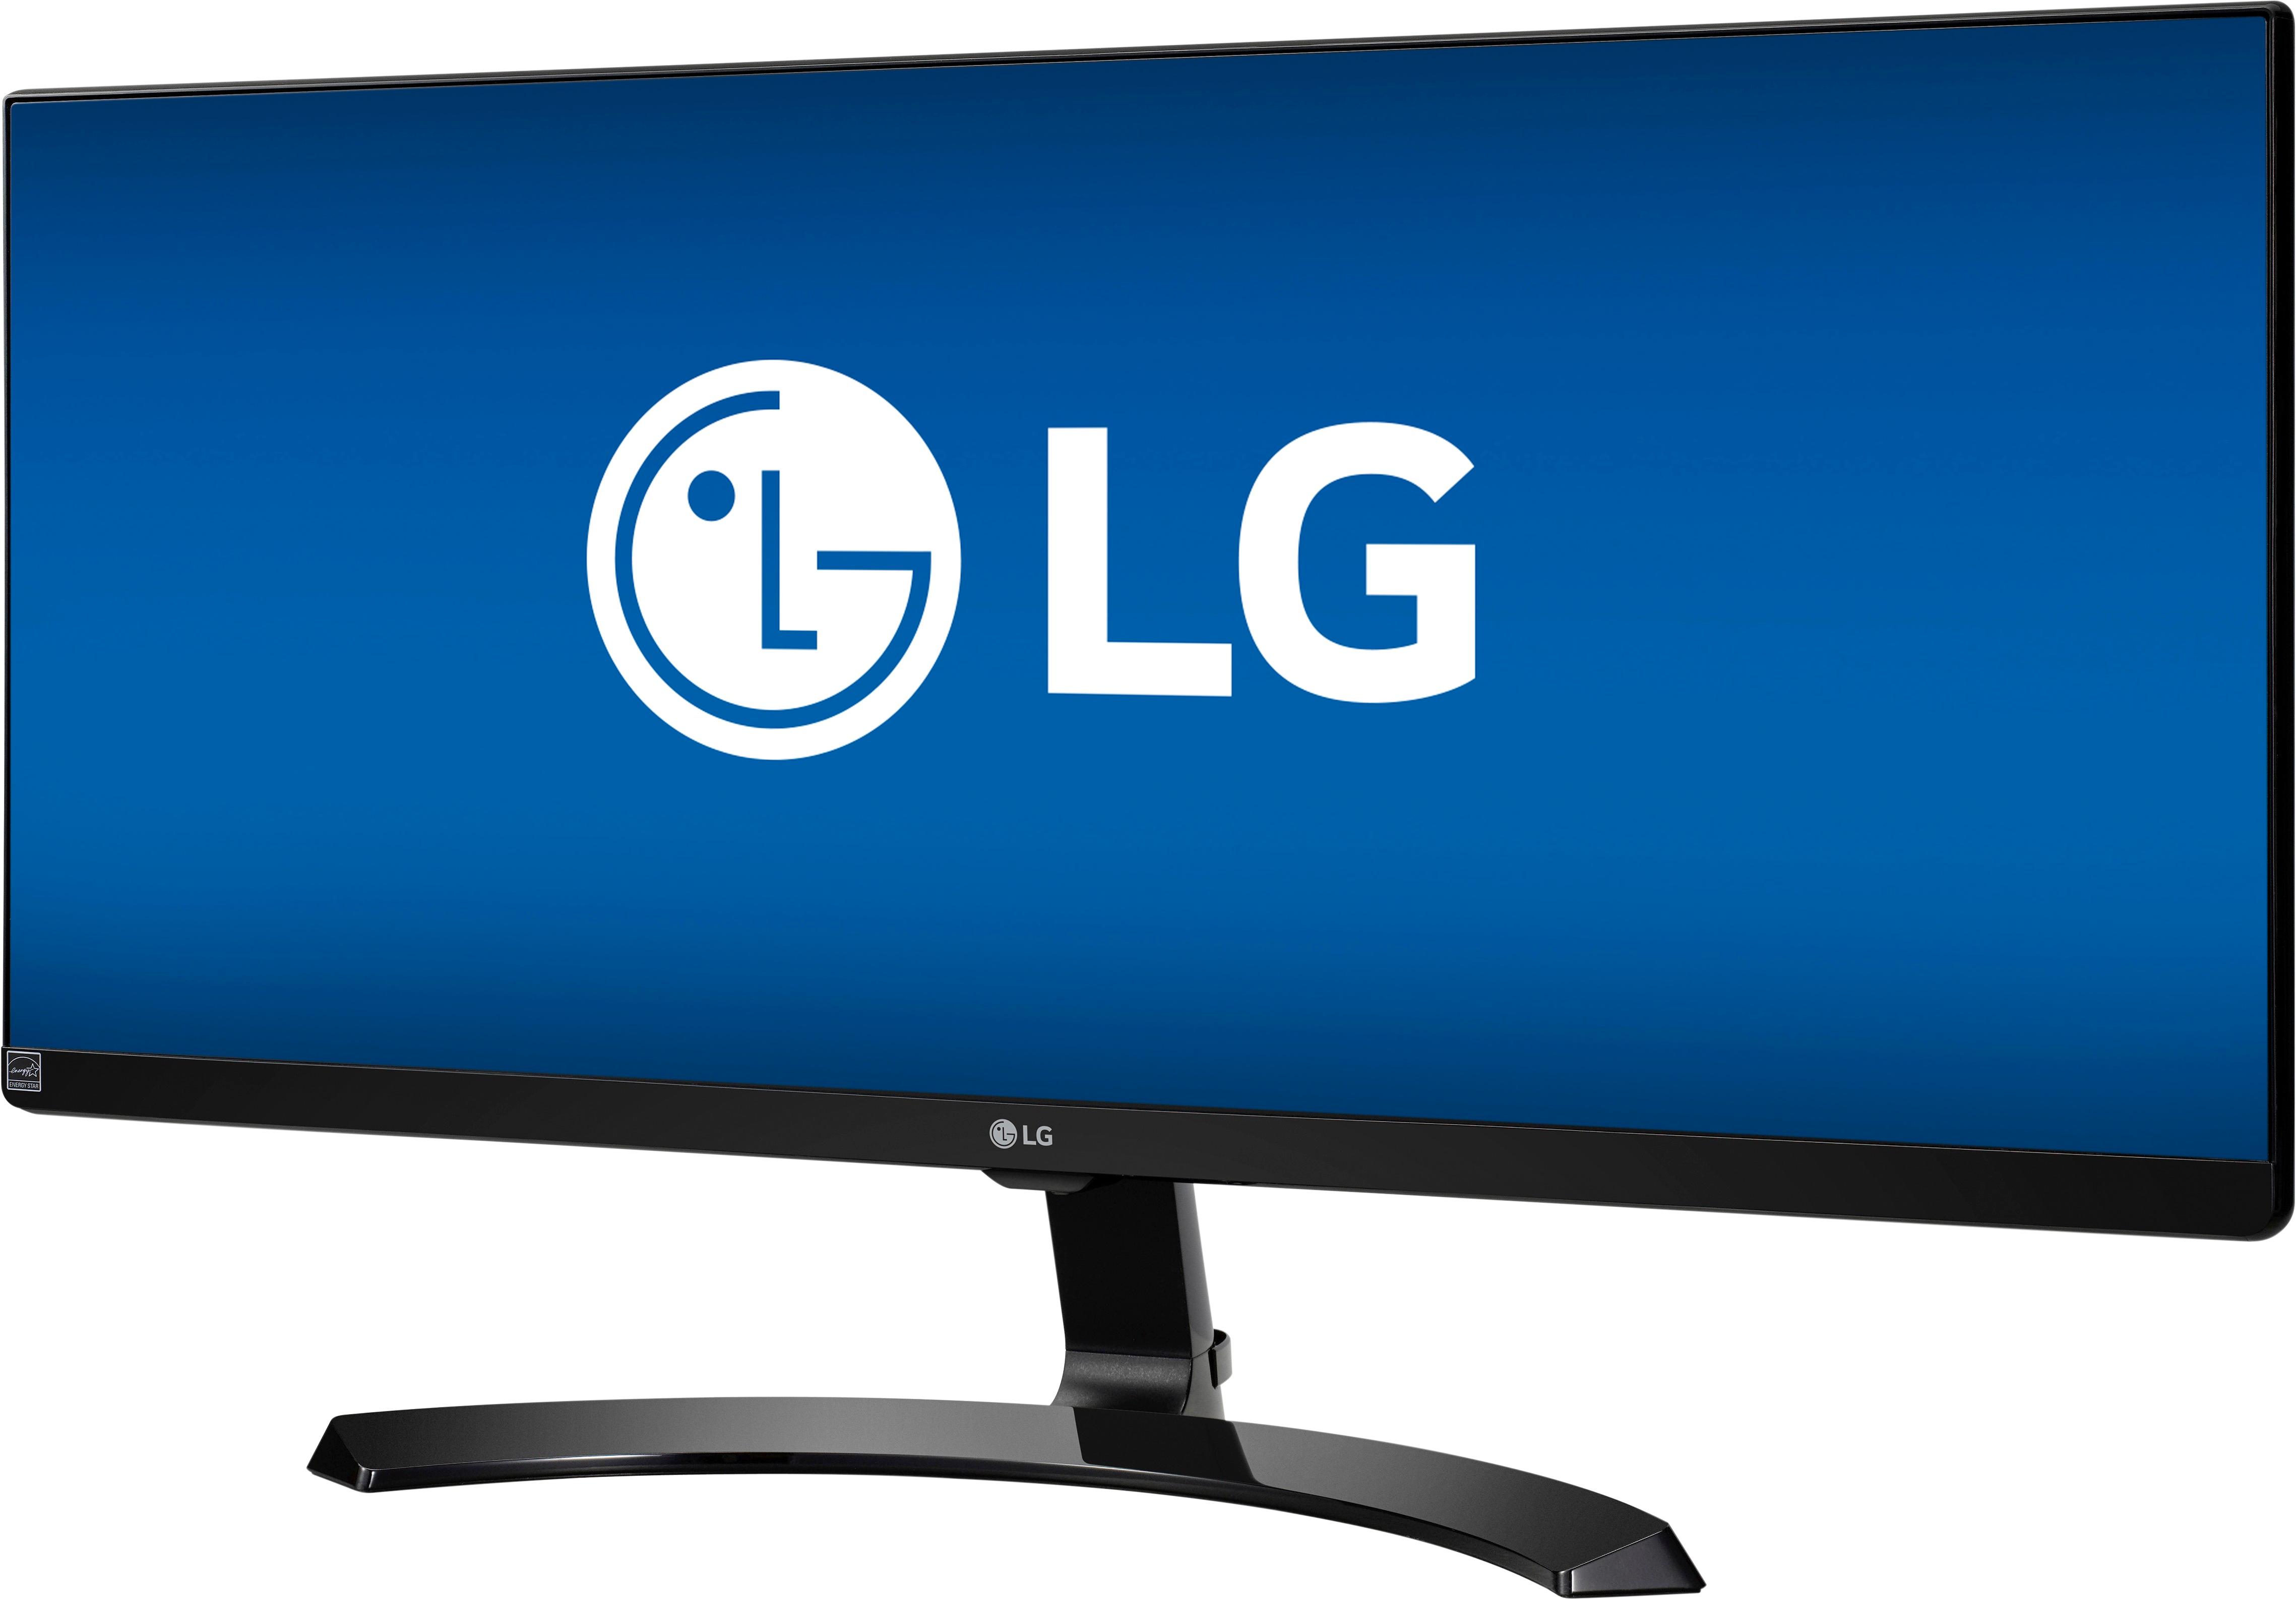 LG 29 IPS LED FHD 21:9 UltraWide FreeSync Monitor 29UM60-P - Best Buy